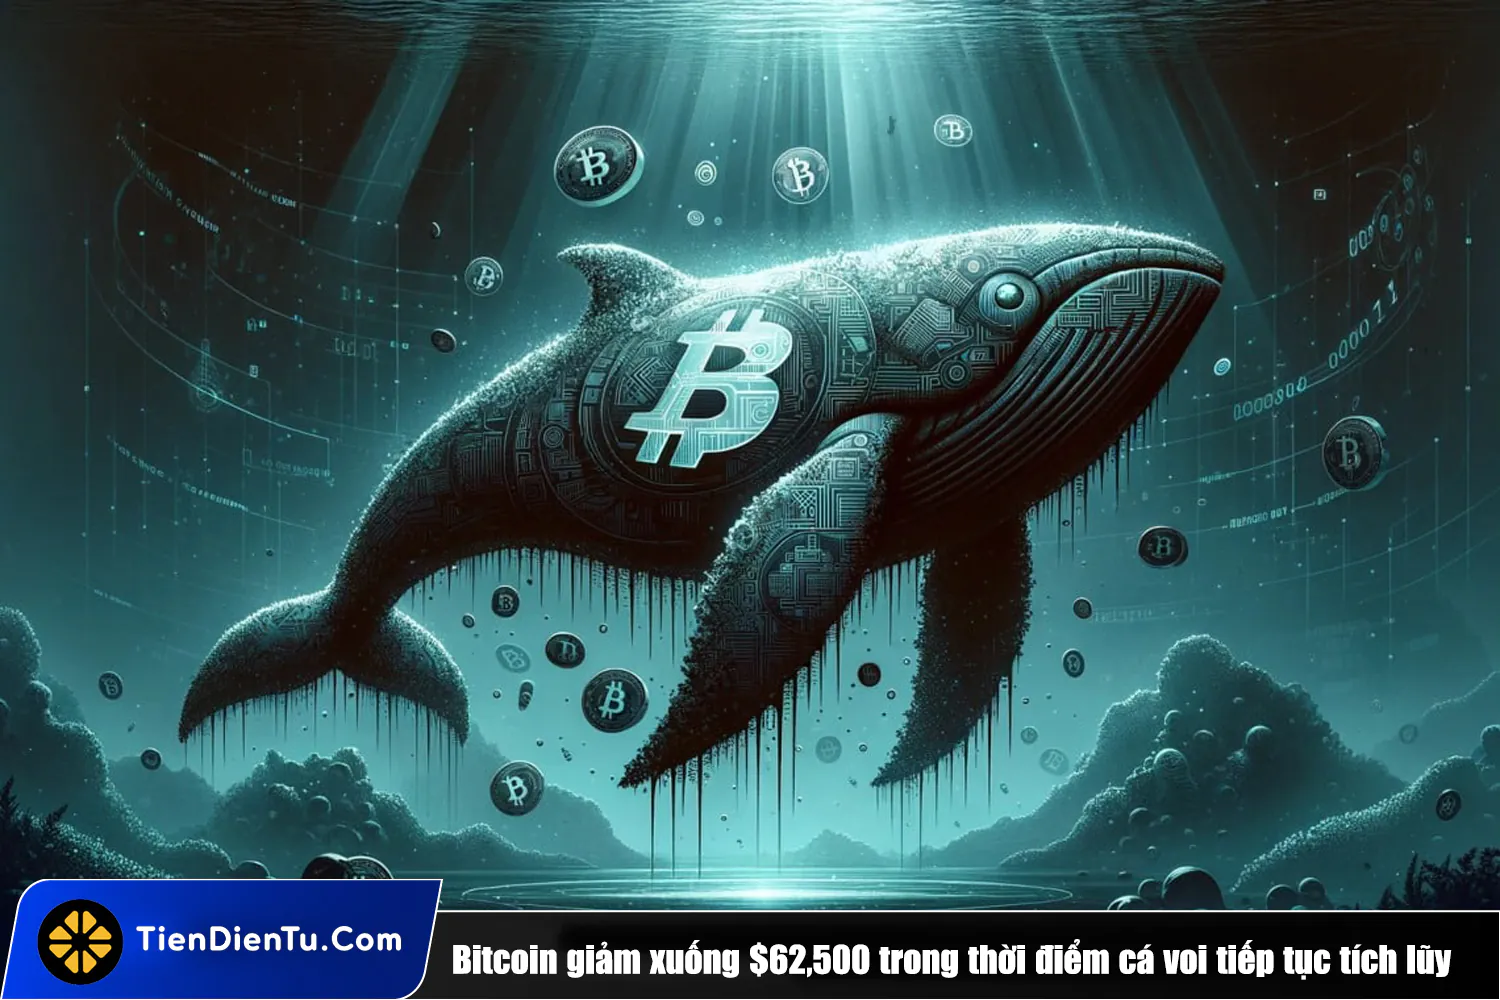 Tiendientu Bitcoin giam xuong 62500 usd